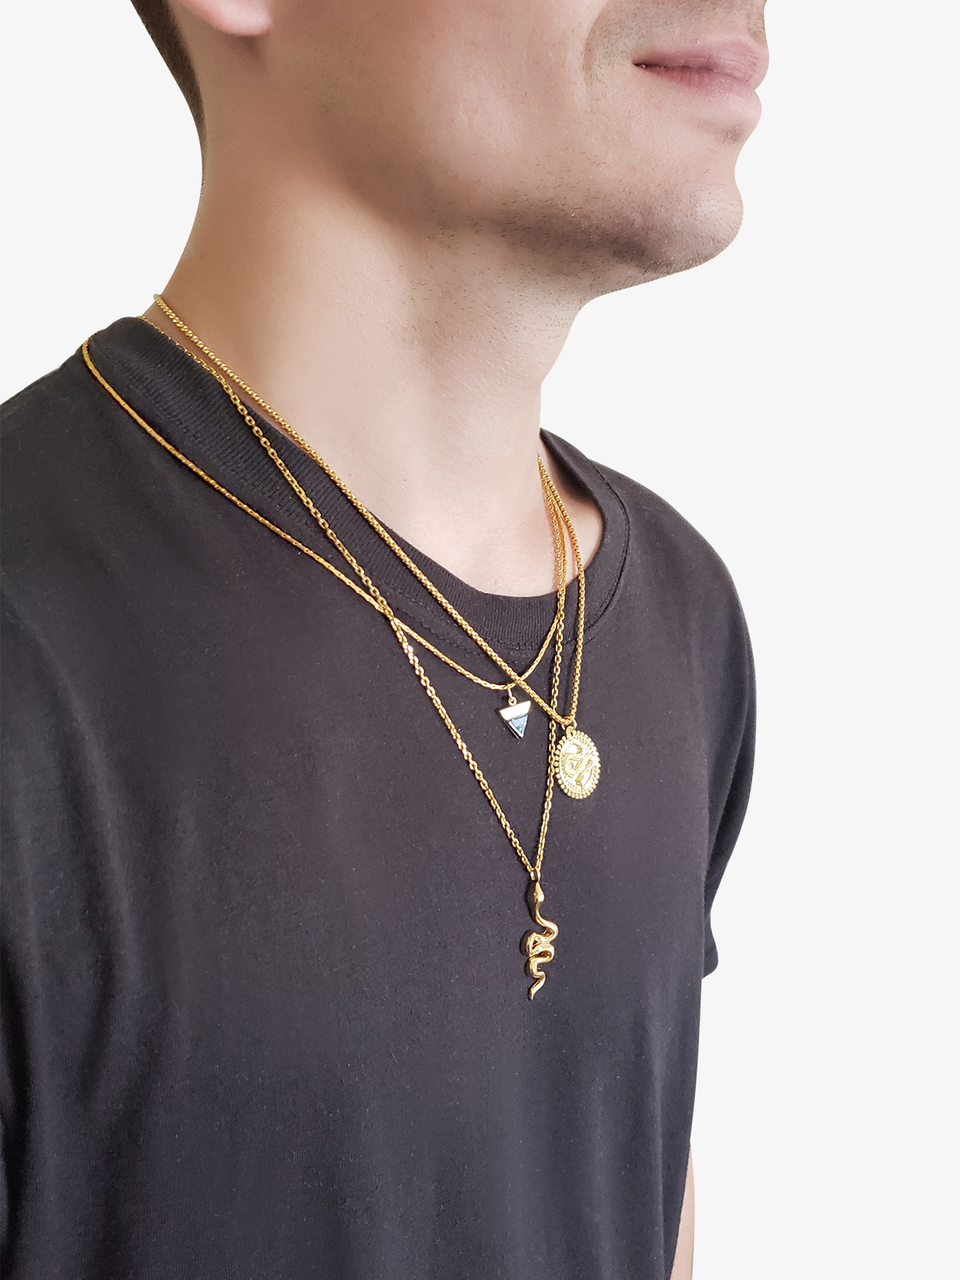 Men's Gold Slithering Snake Necklace Pendant